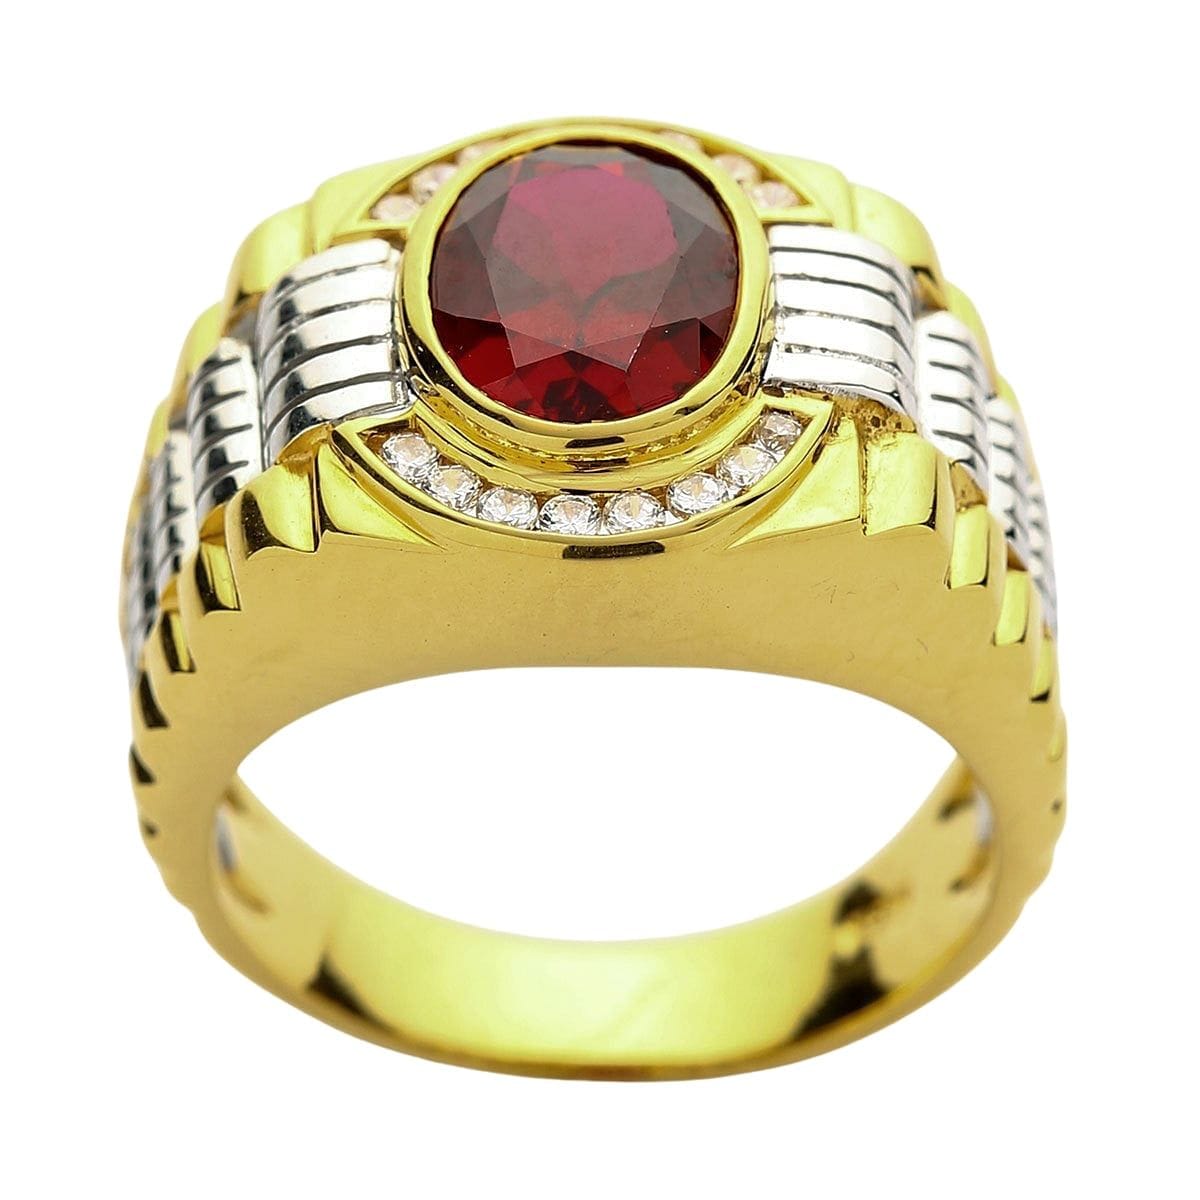 Rolex Ring 14k Gold 3.5 Carats Of Diamonds | eBay